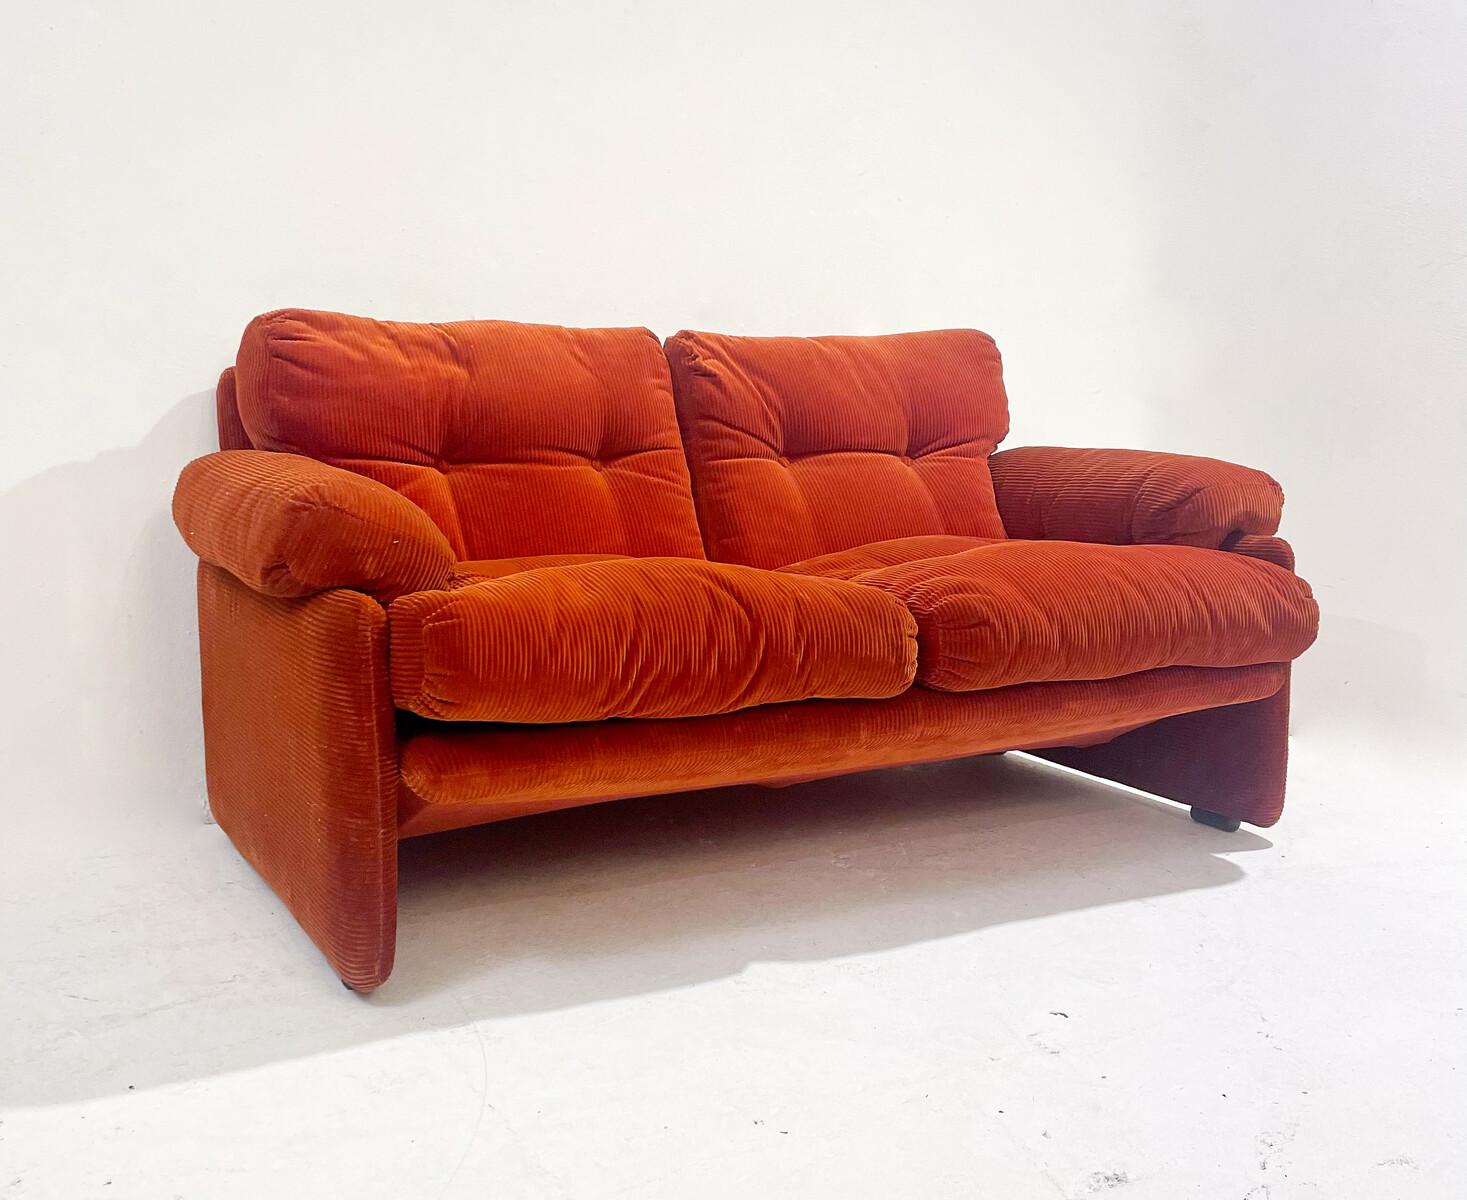 Coronado Two-Seat Sofa by Tobia Scarpa for C&B Italia, Italy
1960s.Original fabric 